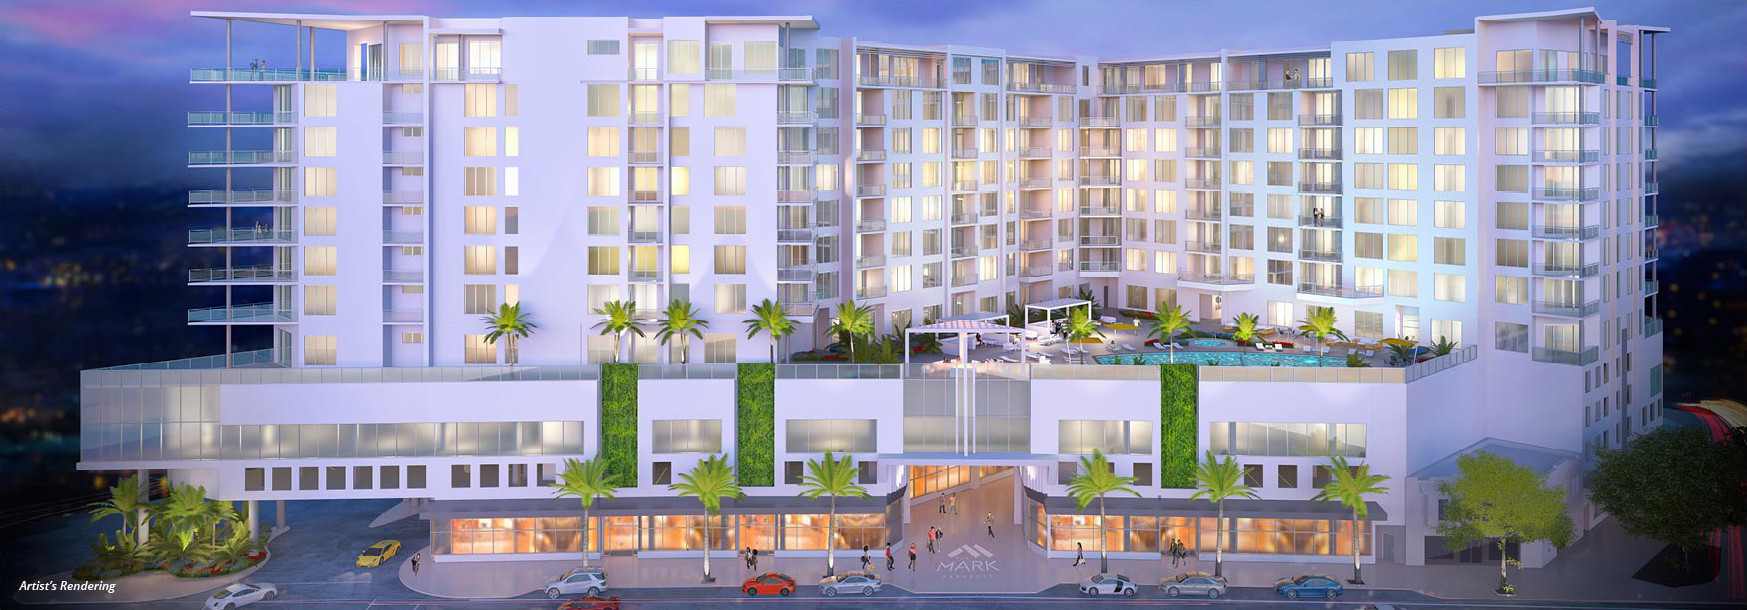 Sarasota Florida Luxury Million Dollar New Homes & New Condos